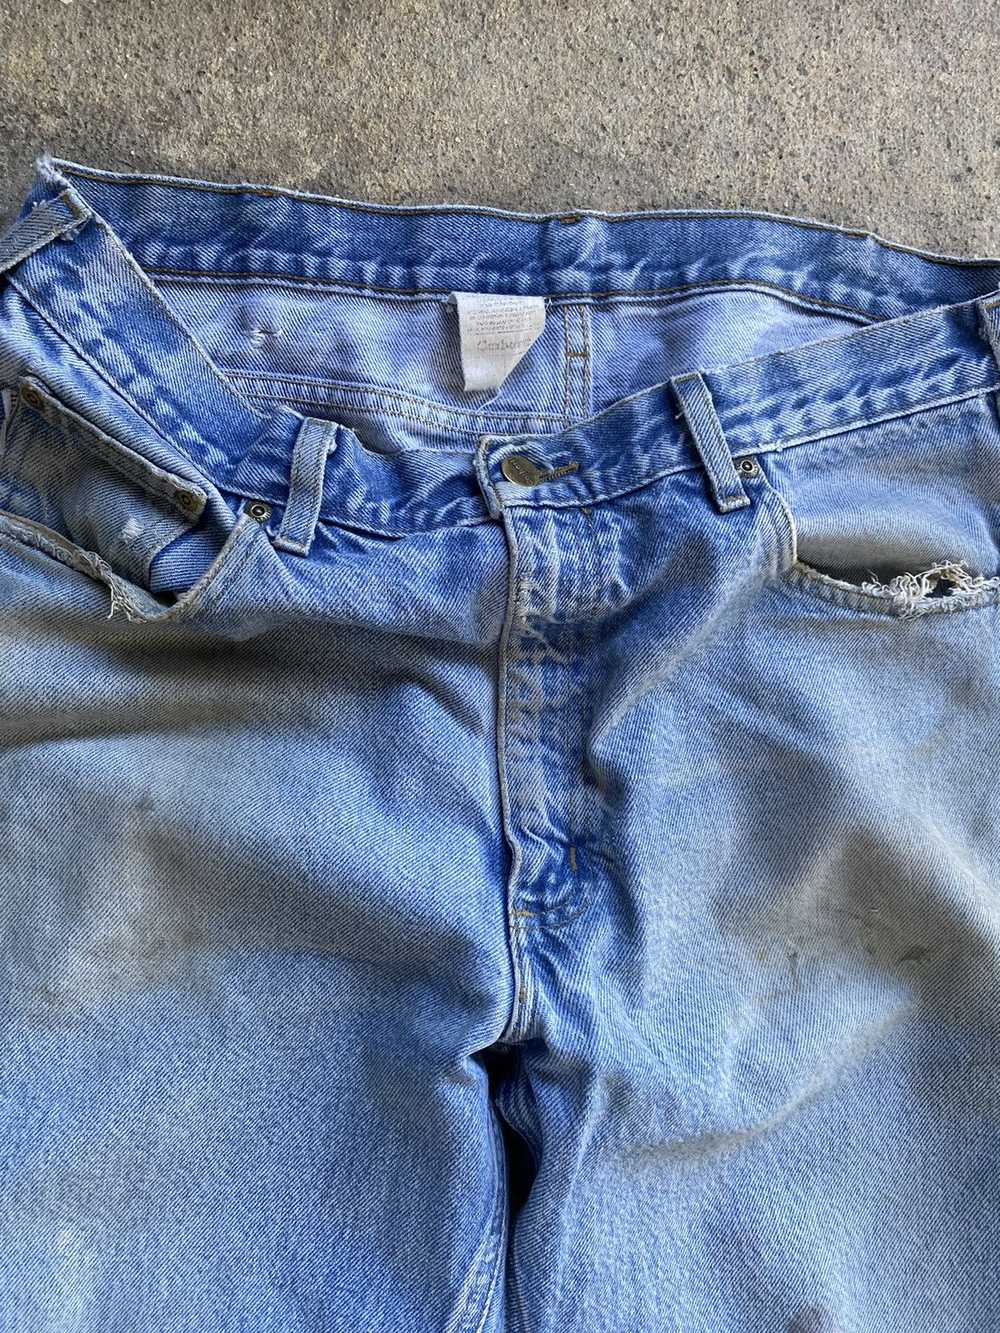 Carhartt × Vintage Vintage Carhartt Denim Jeans - image 4